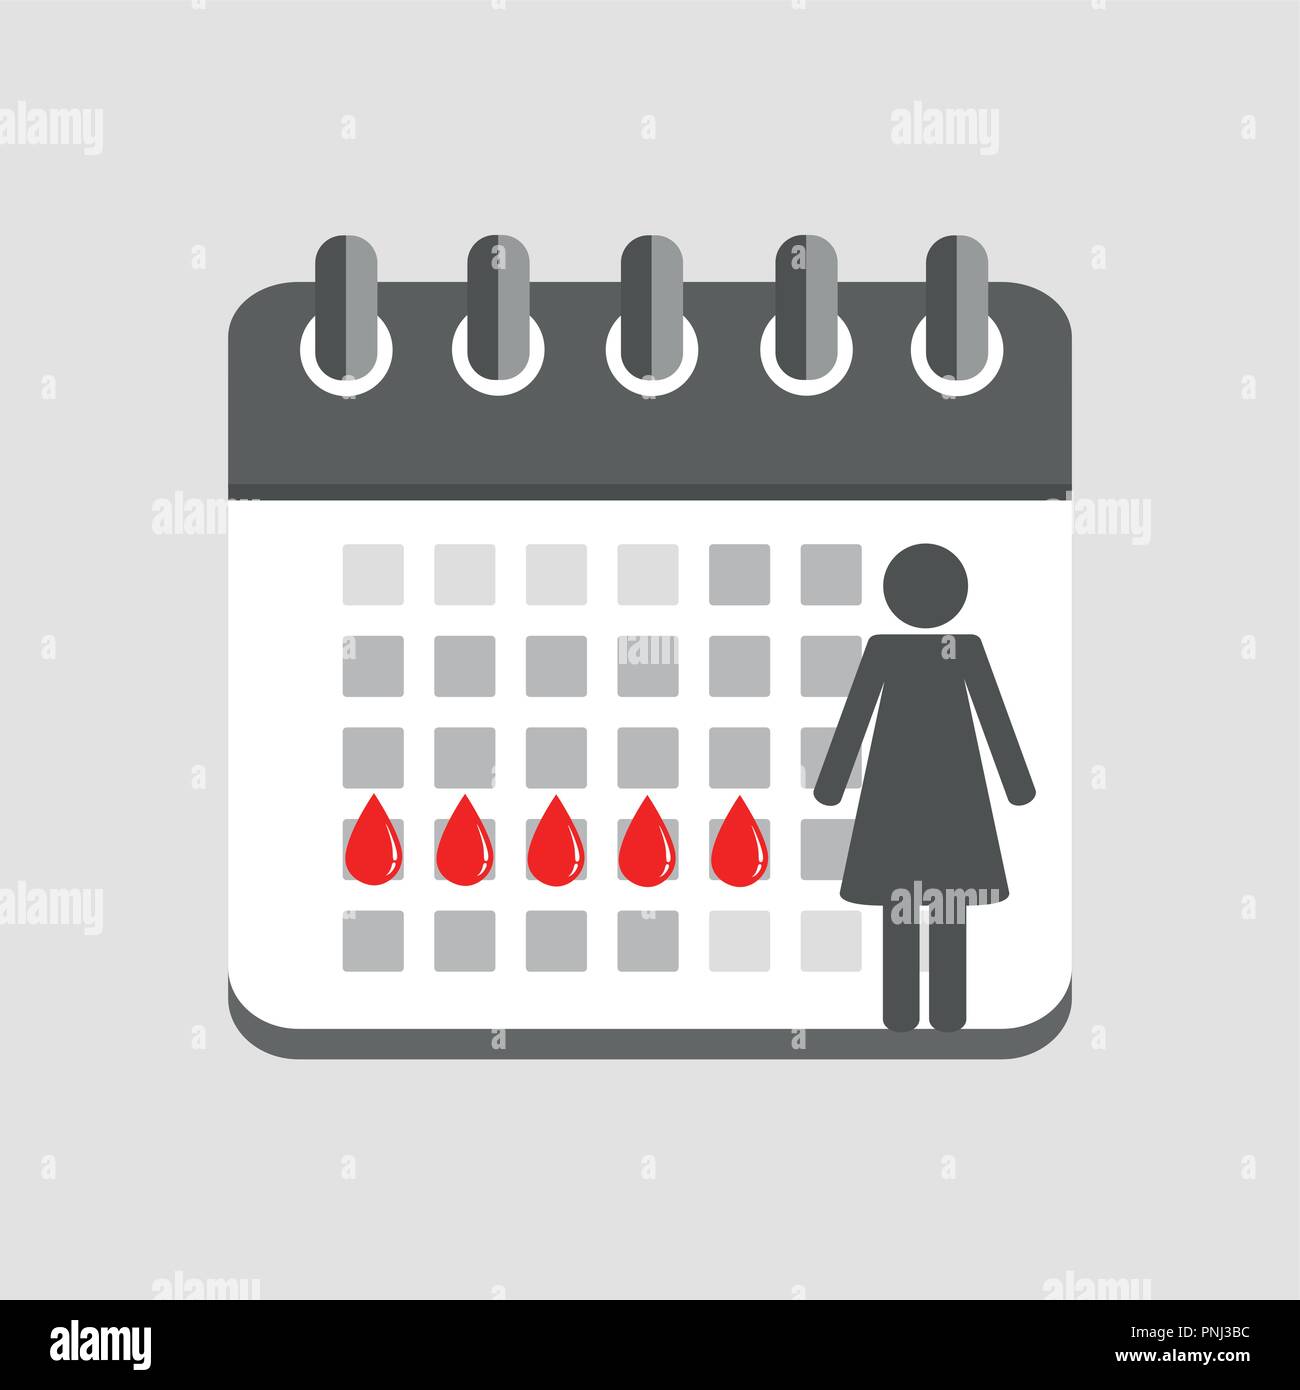 Menstruations Kalender rote Zeichen des Menstruationszyklus Vektor-illustration EPS 10. Stock Vektor